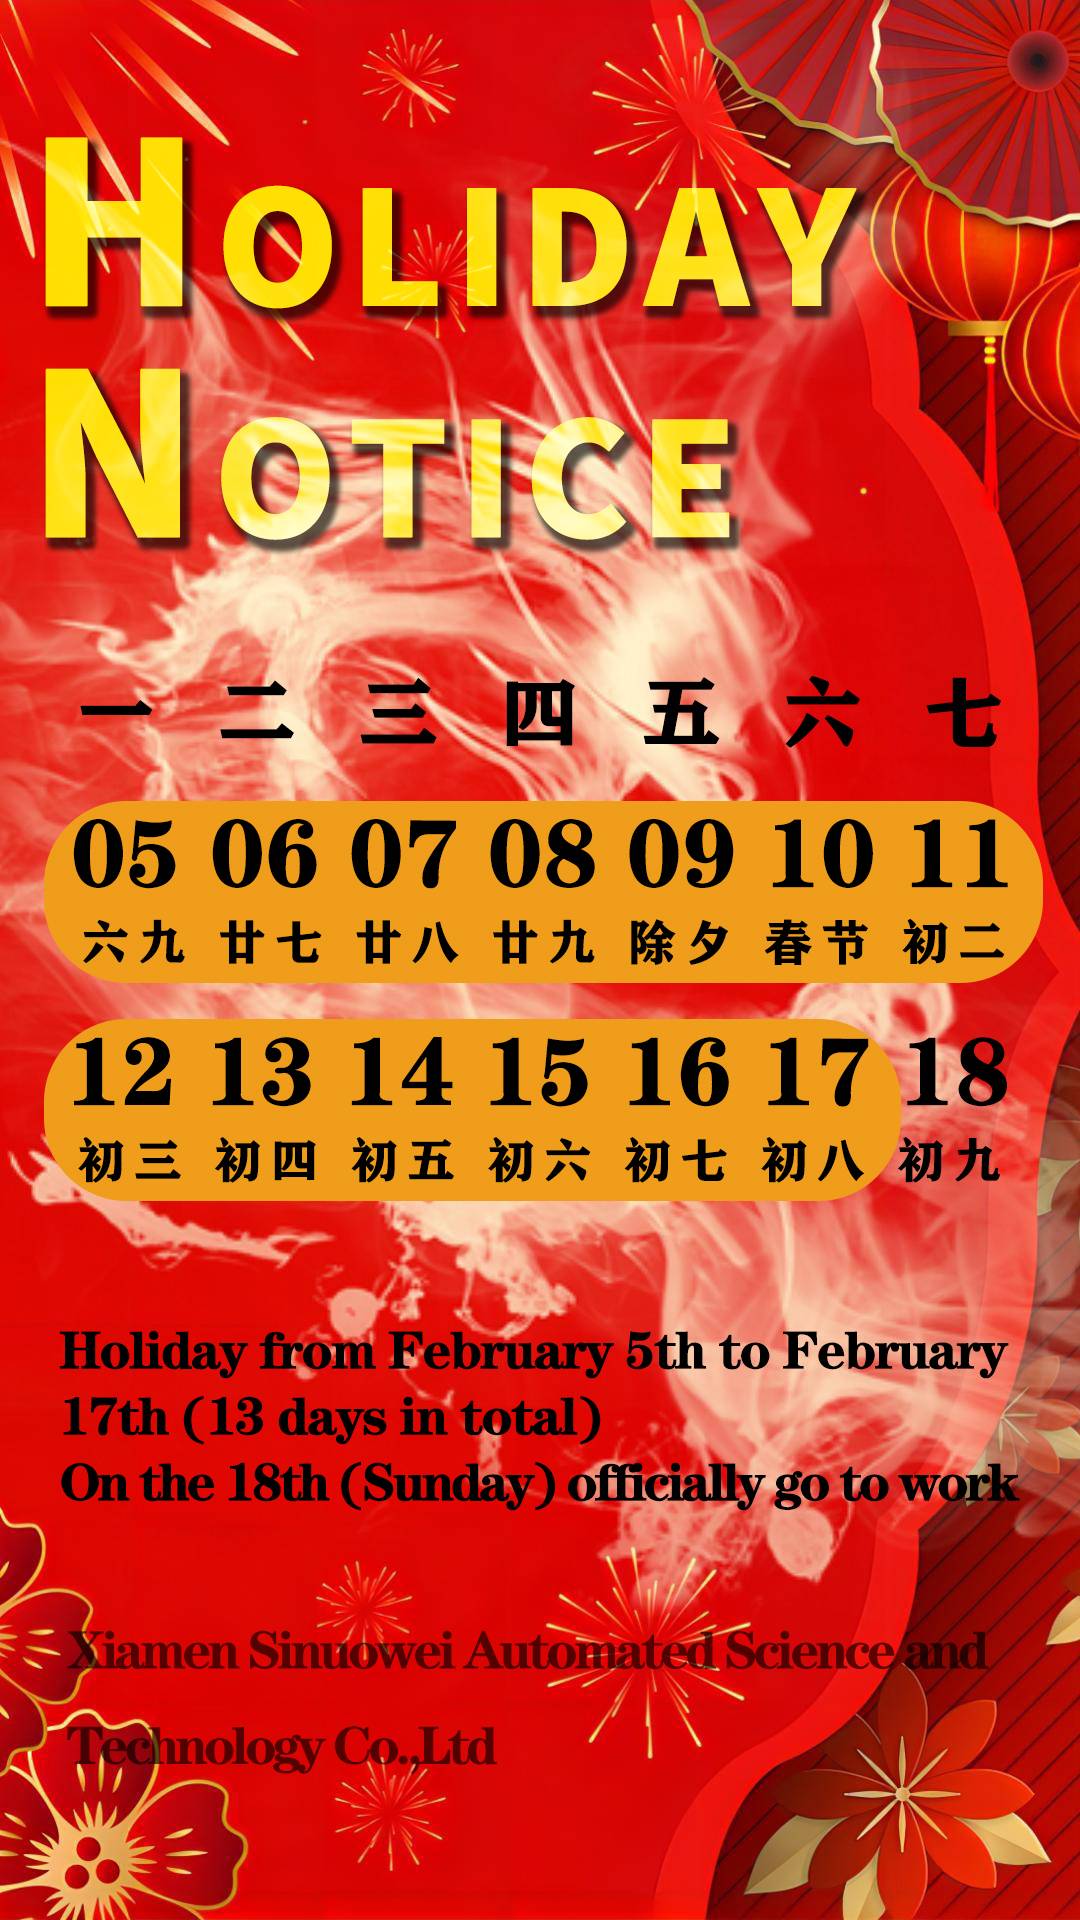 Spring Festival holiday notice